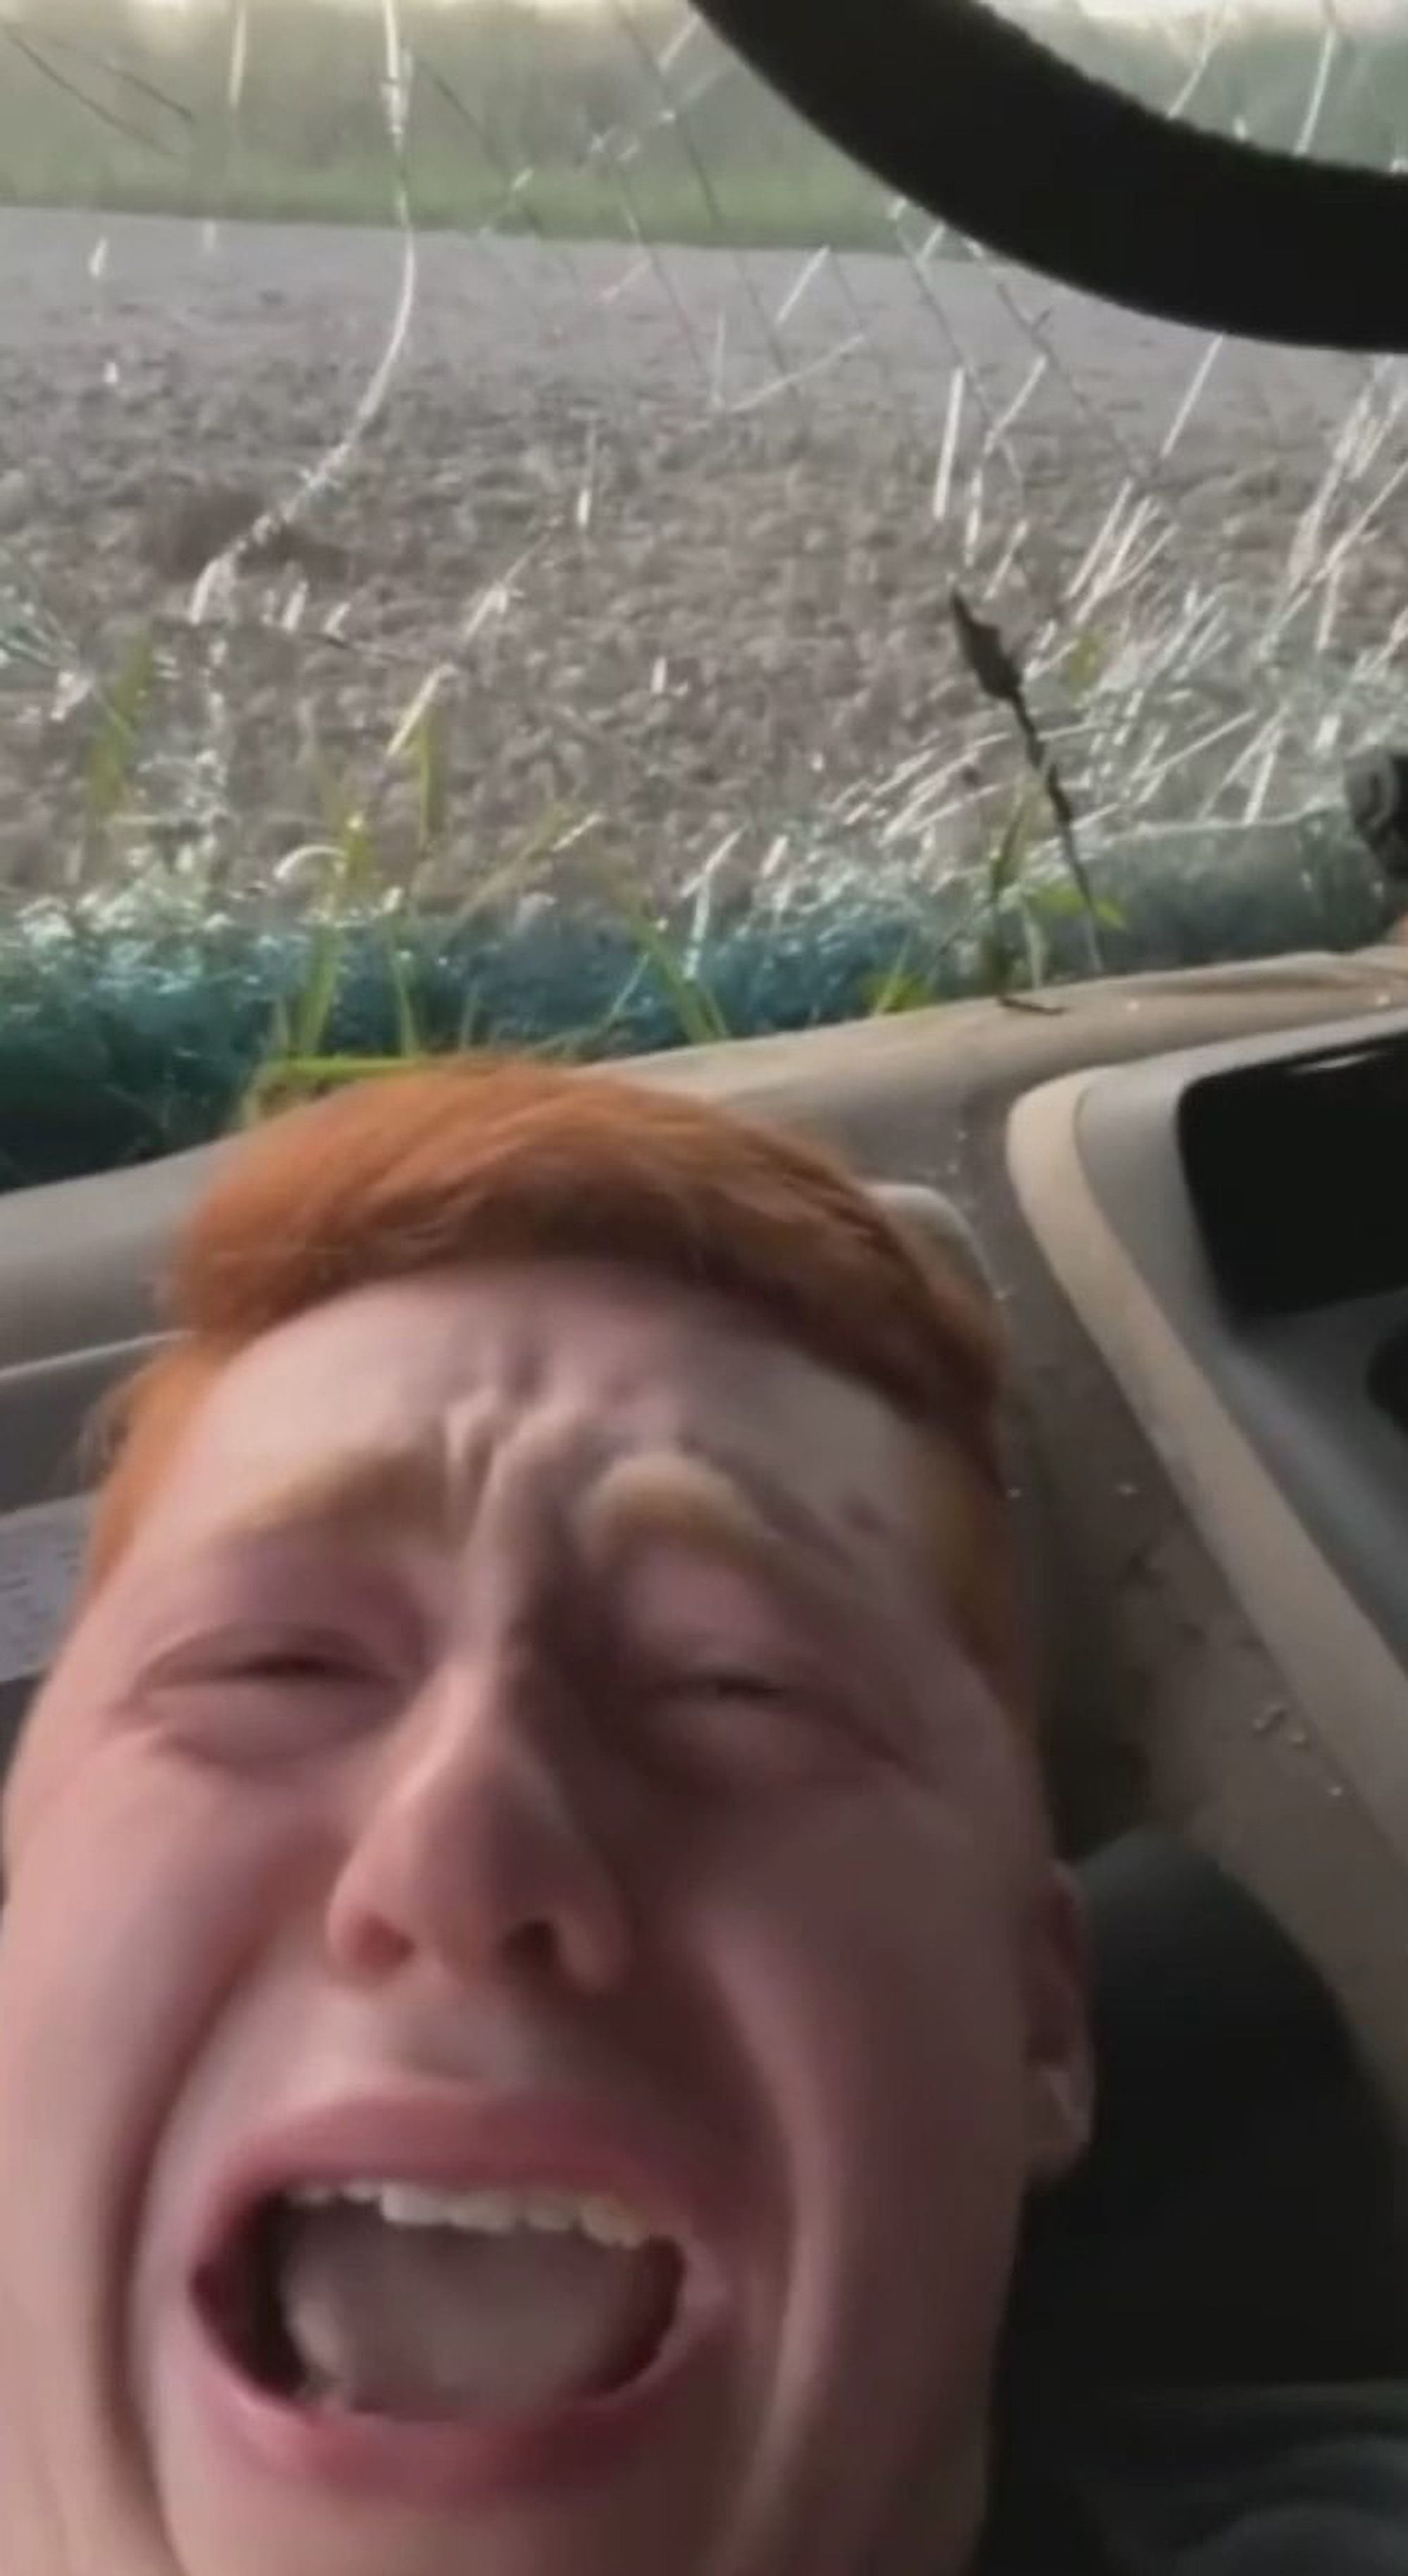 Driver's Sobbing TikTok Video After Car Crash Baffles Internet